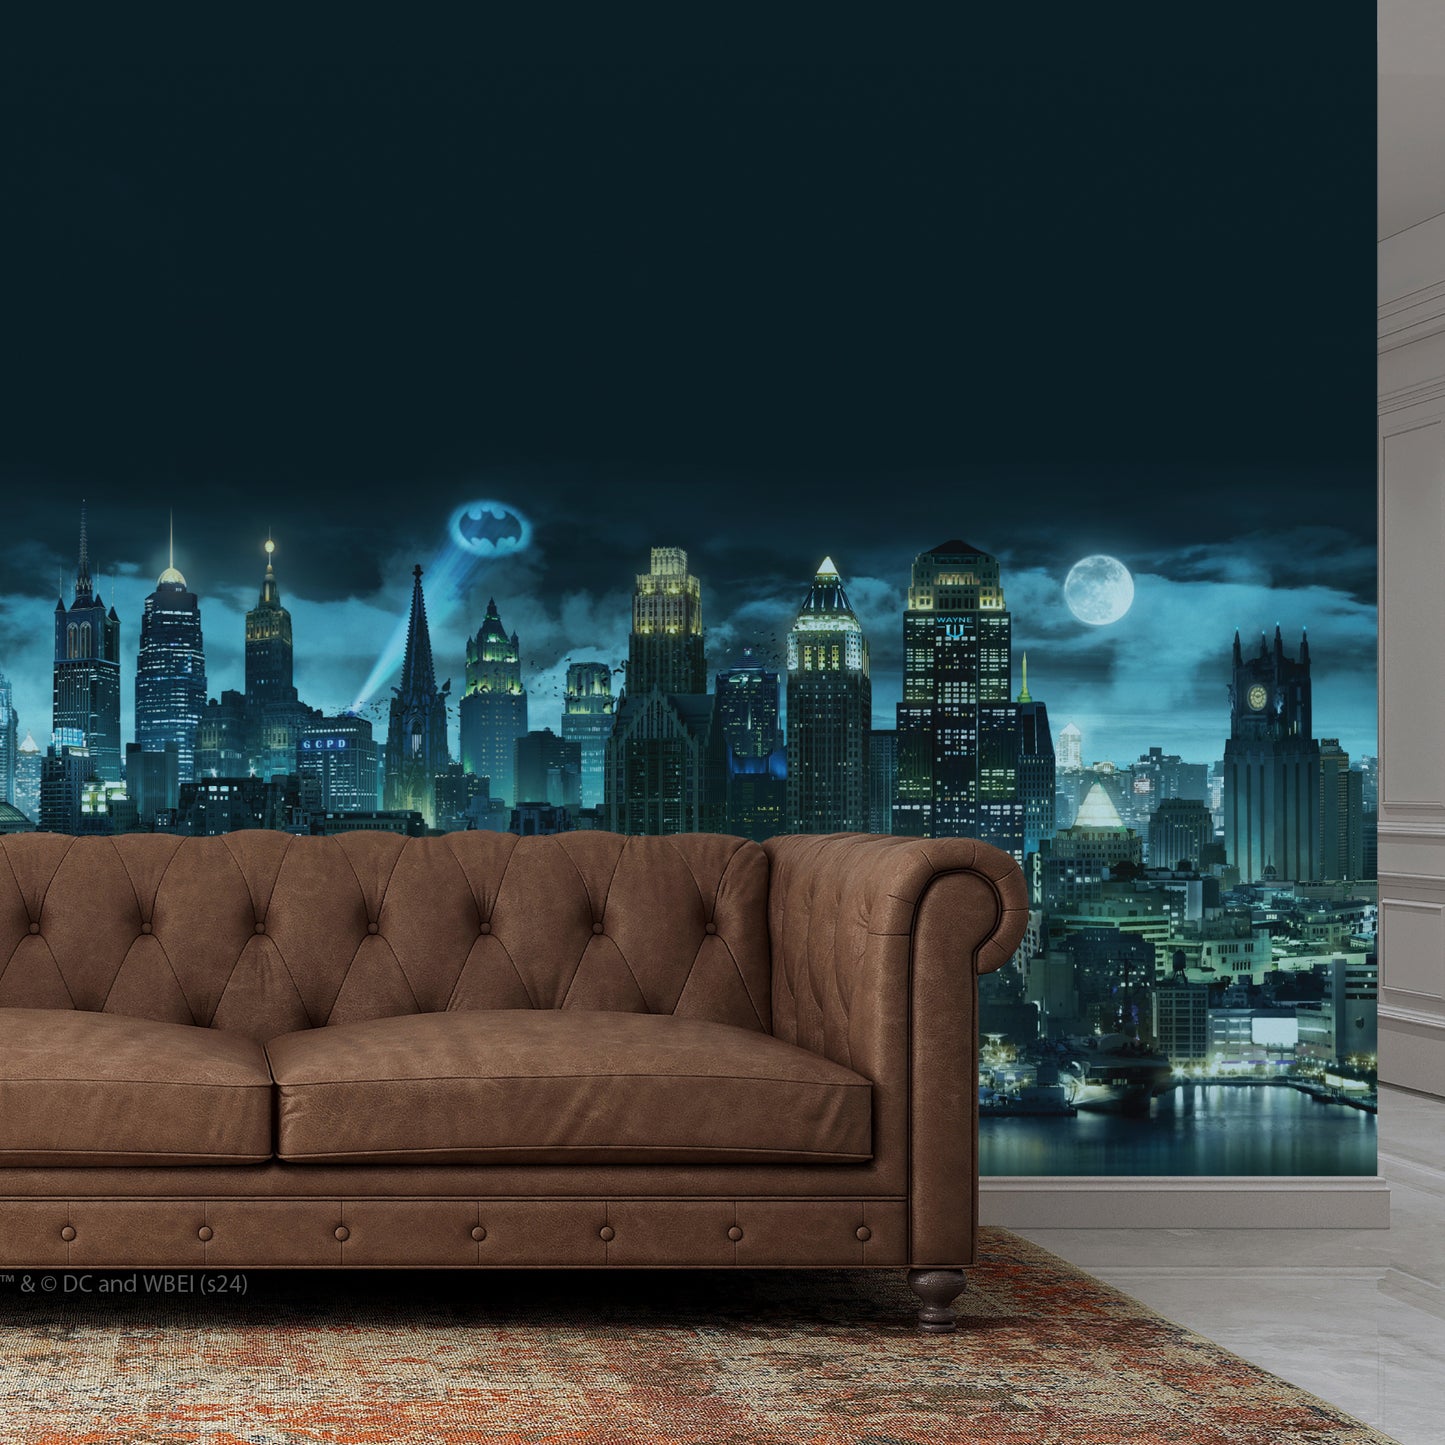 Batman™ Wall Sticker - Gotham City Full Wall Mural Decal DC Superhero Art